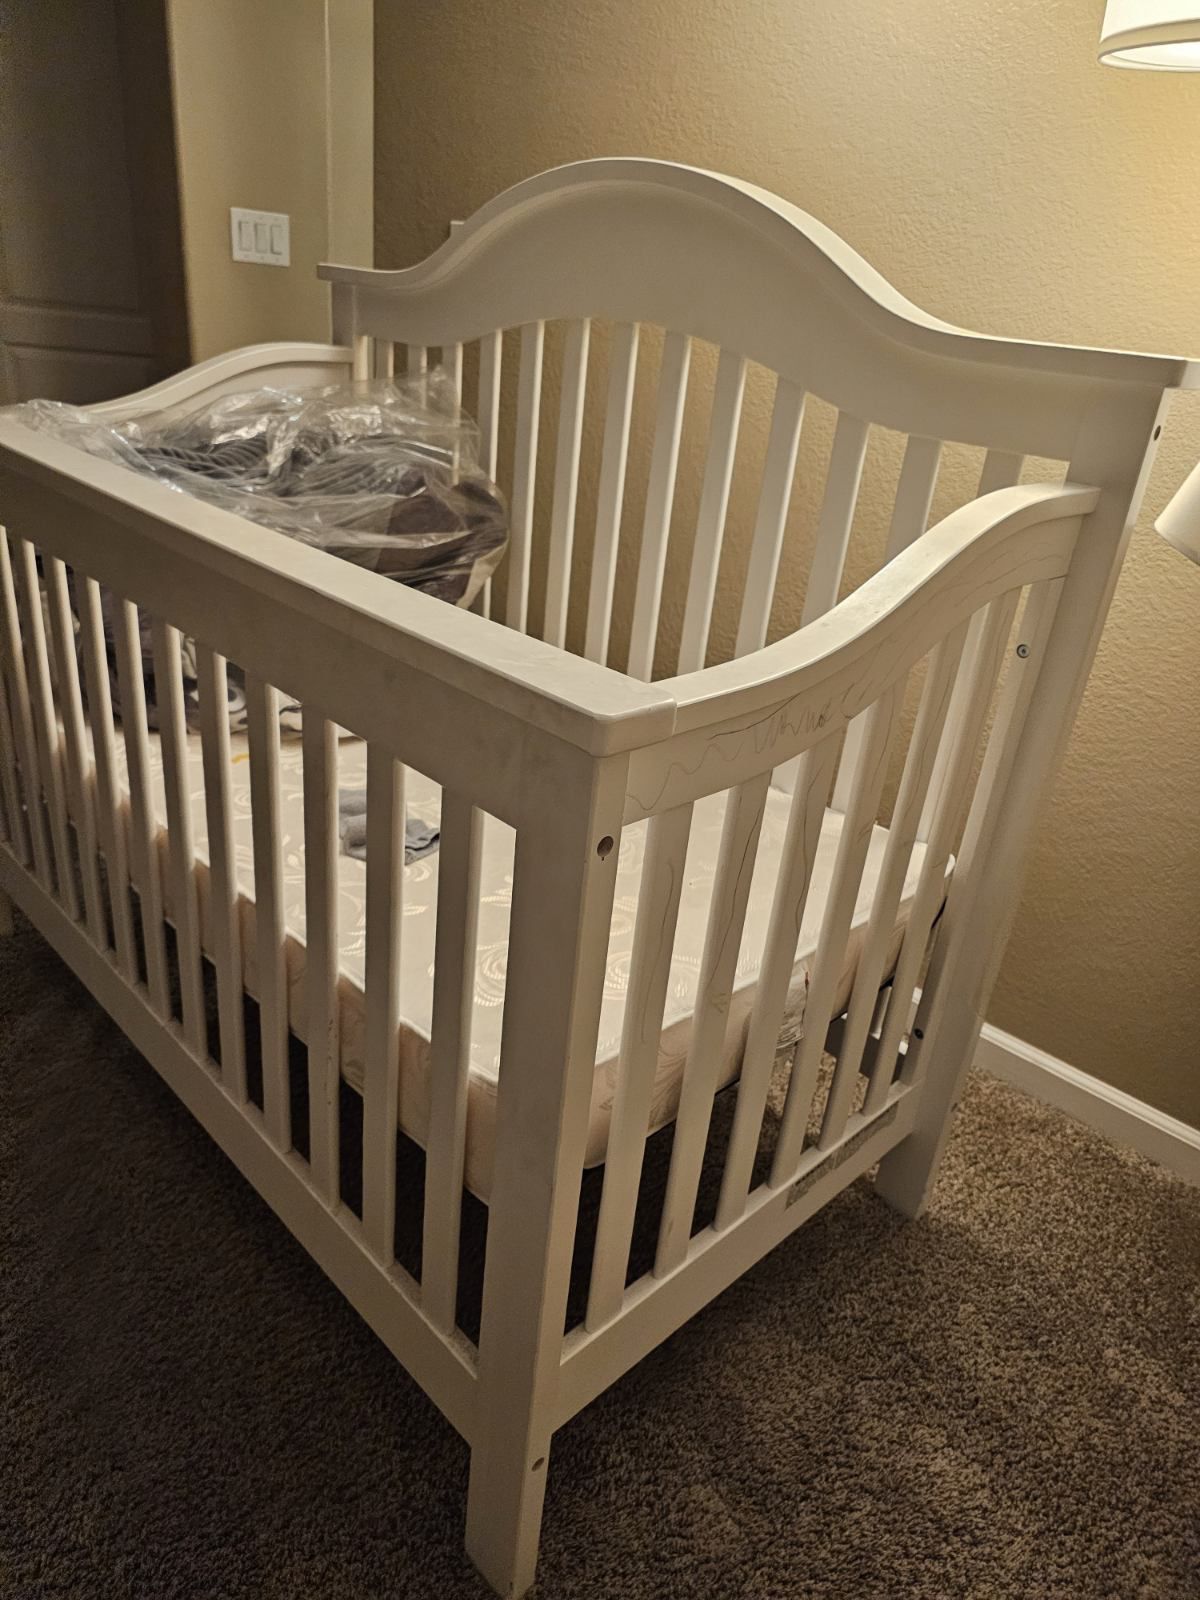 Baby Crib Color White 